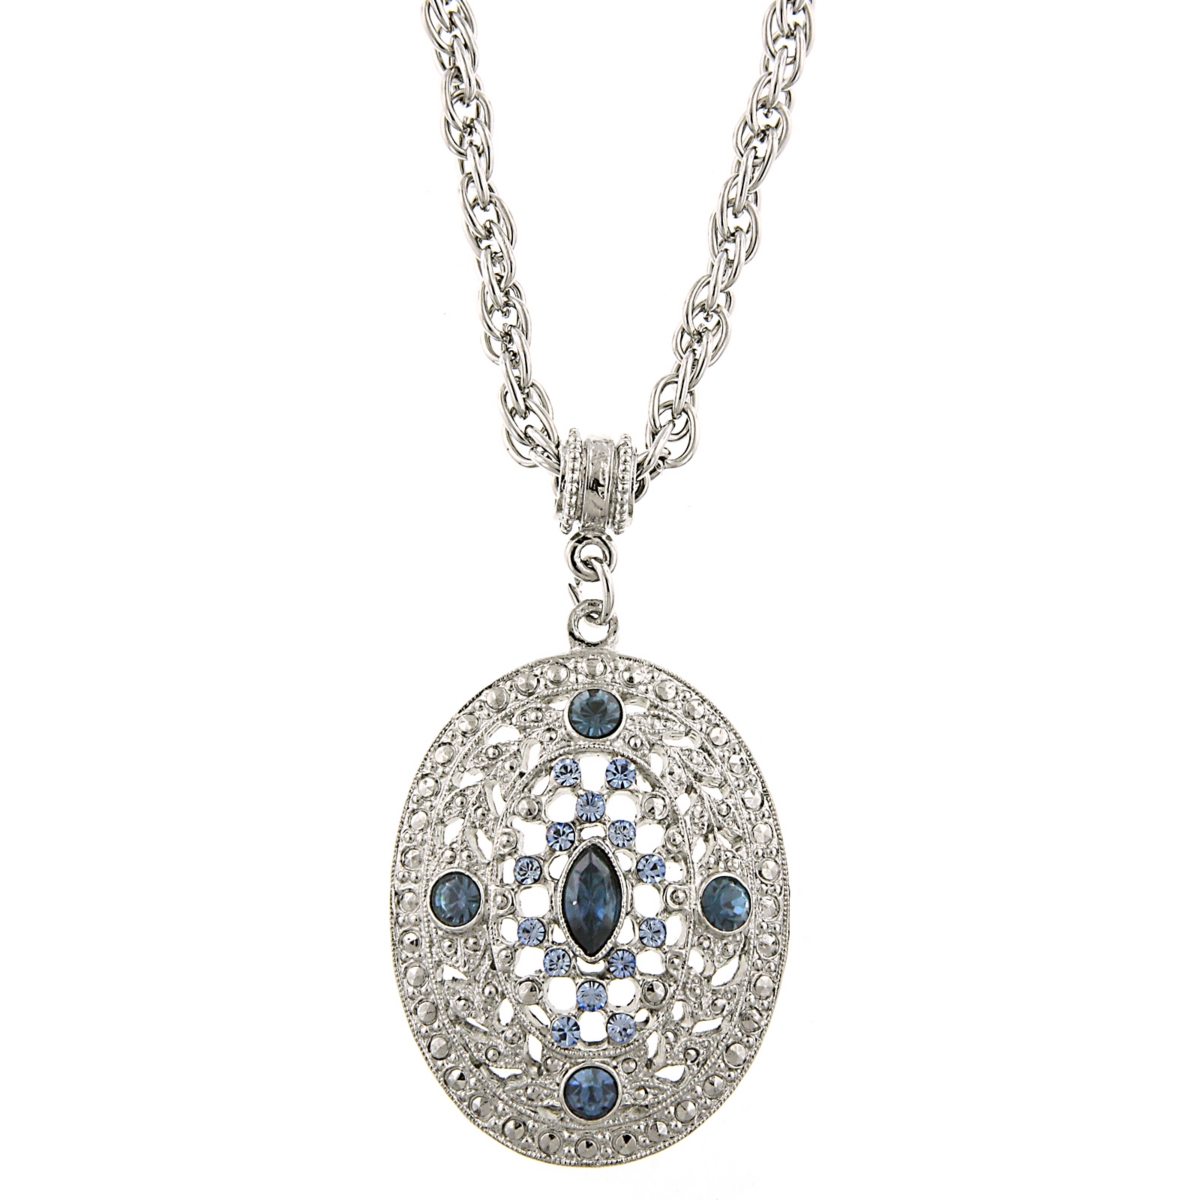 2028 Silver-tone Dark And Light Blue Crystal Filigree Oval Pendant Necklace 16" Adjustable